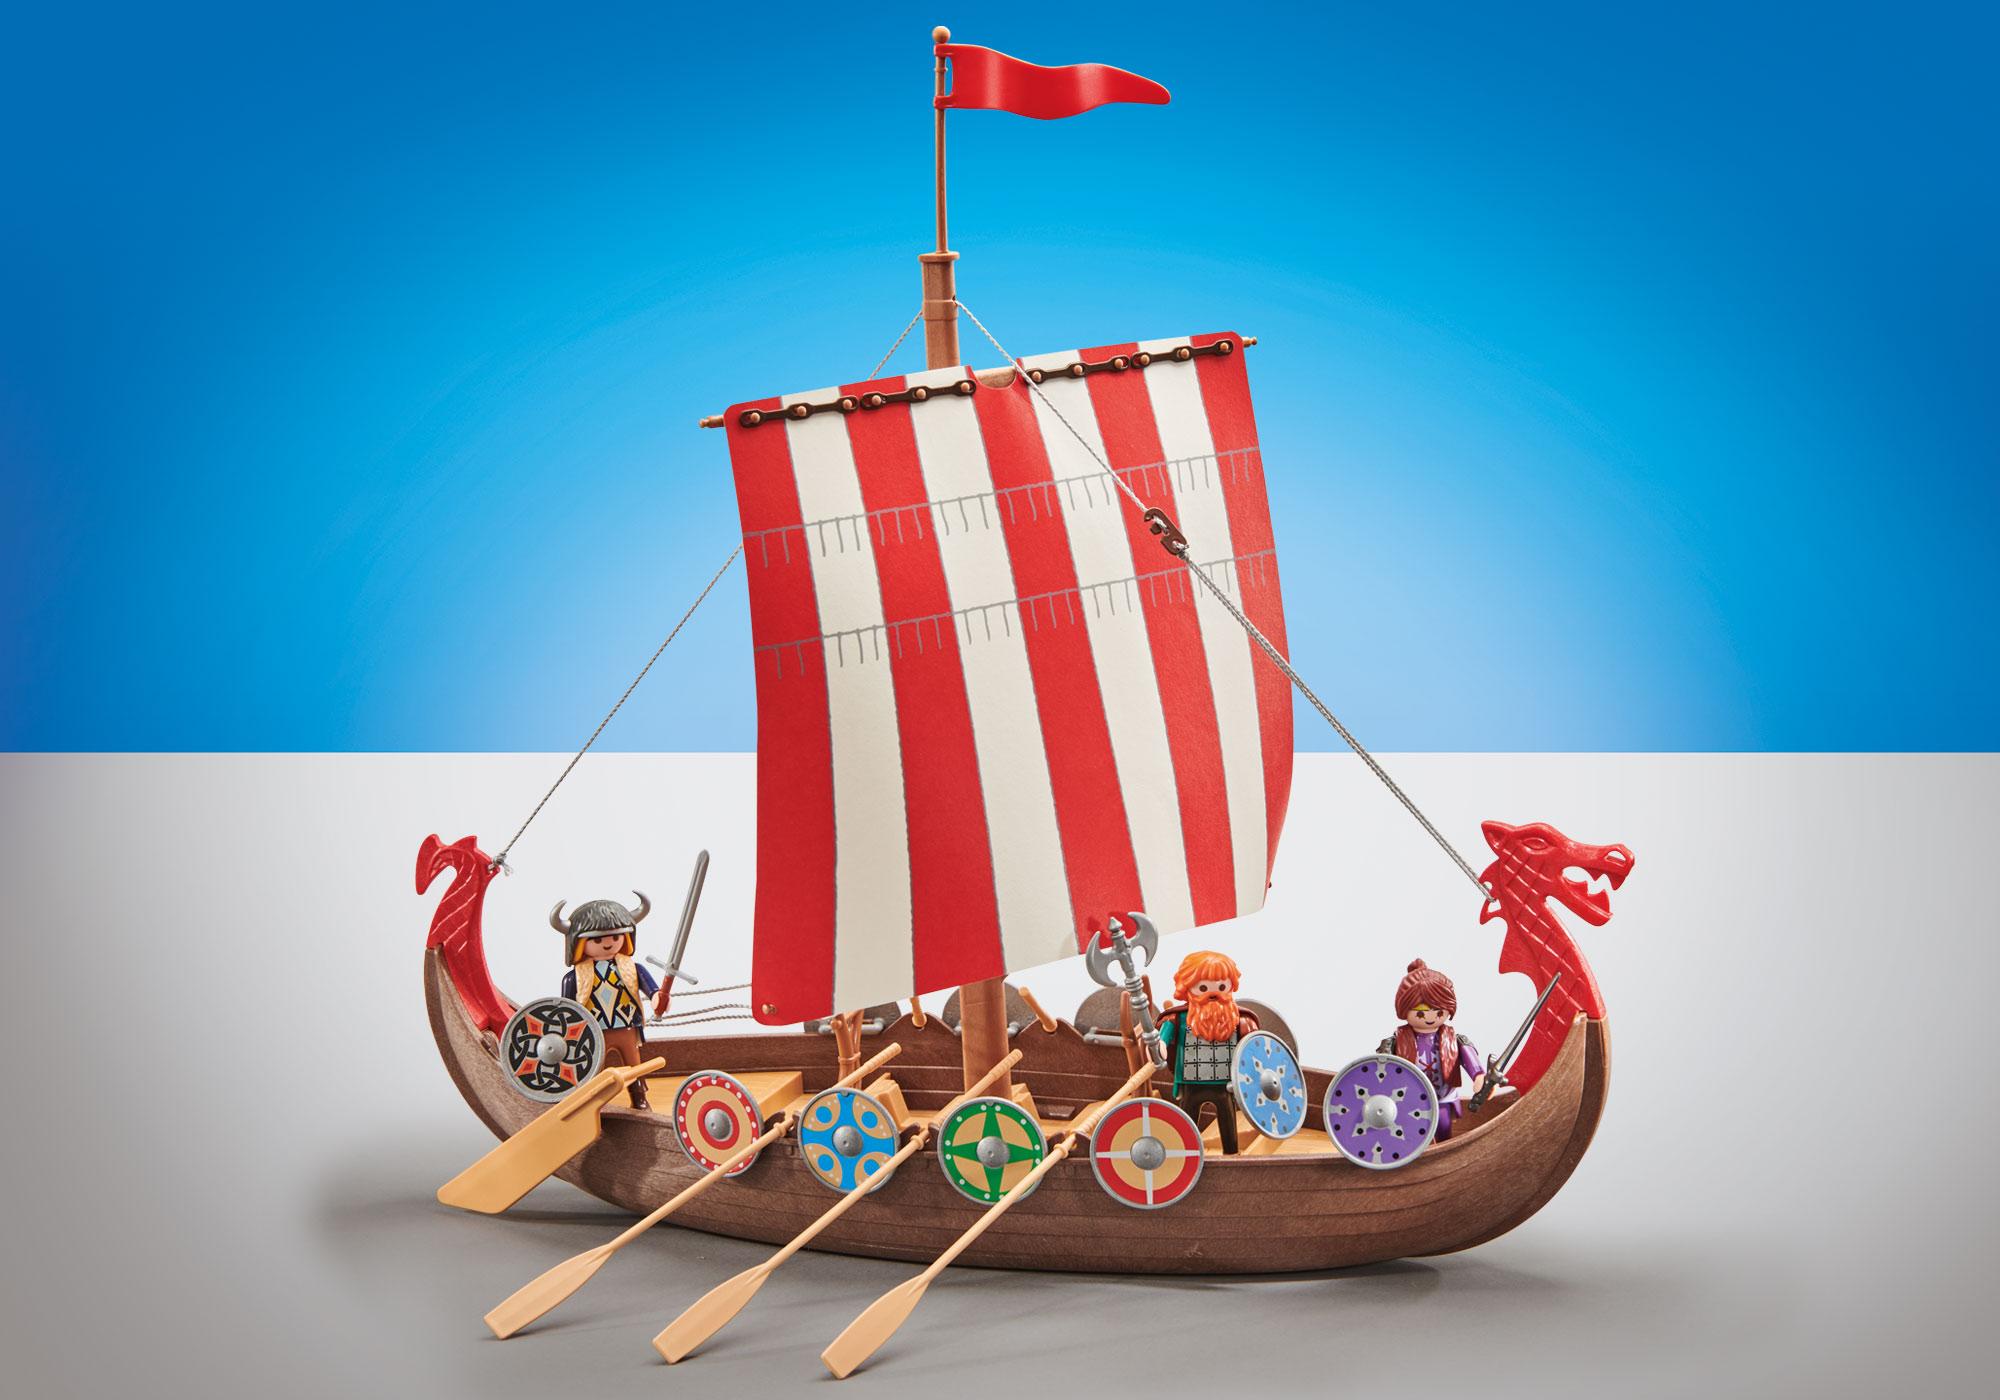 Viking Ships